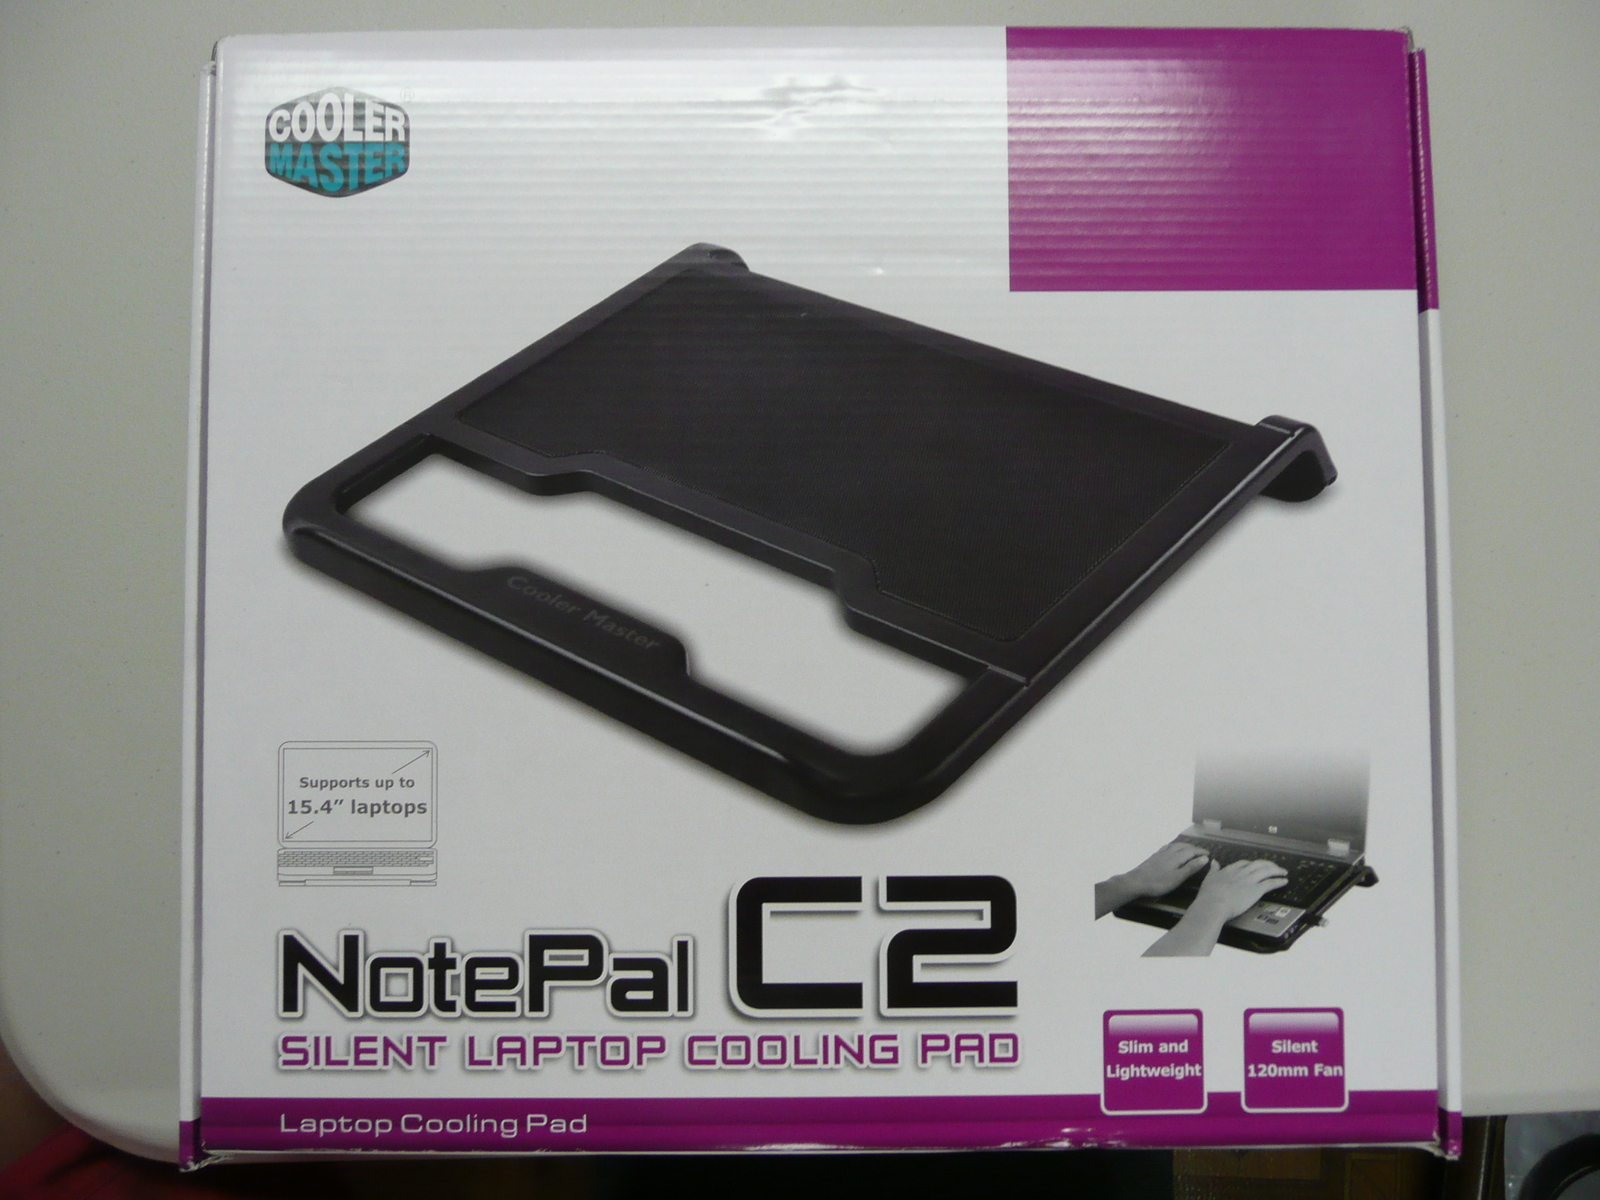 Cooler Master NotePal CMC2 Notebook Cooler for 15.4" notebooks - R9-NBC-CMC2-GP  - $21.95